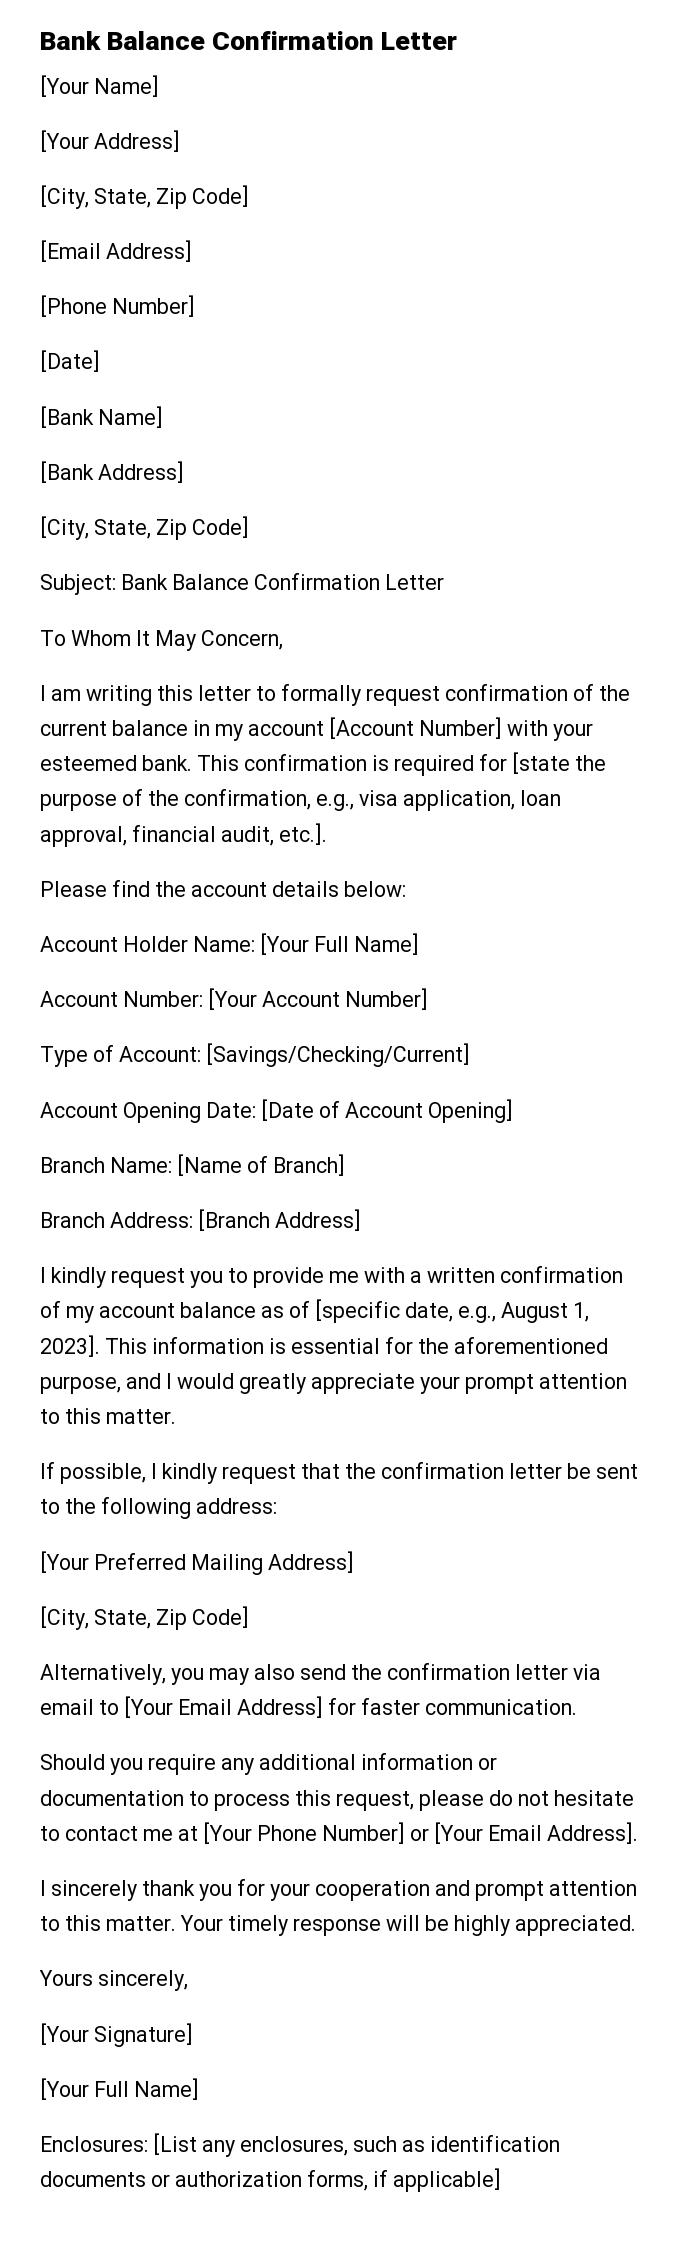 Bank Balance Confirmation Letter